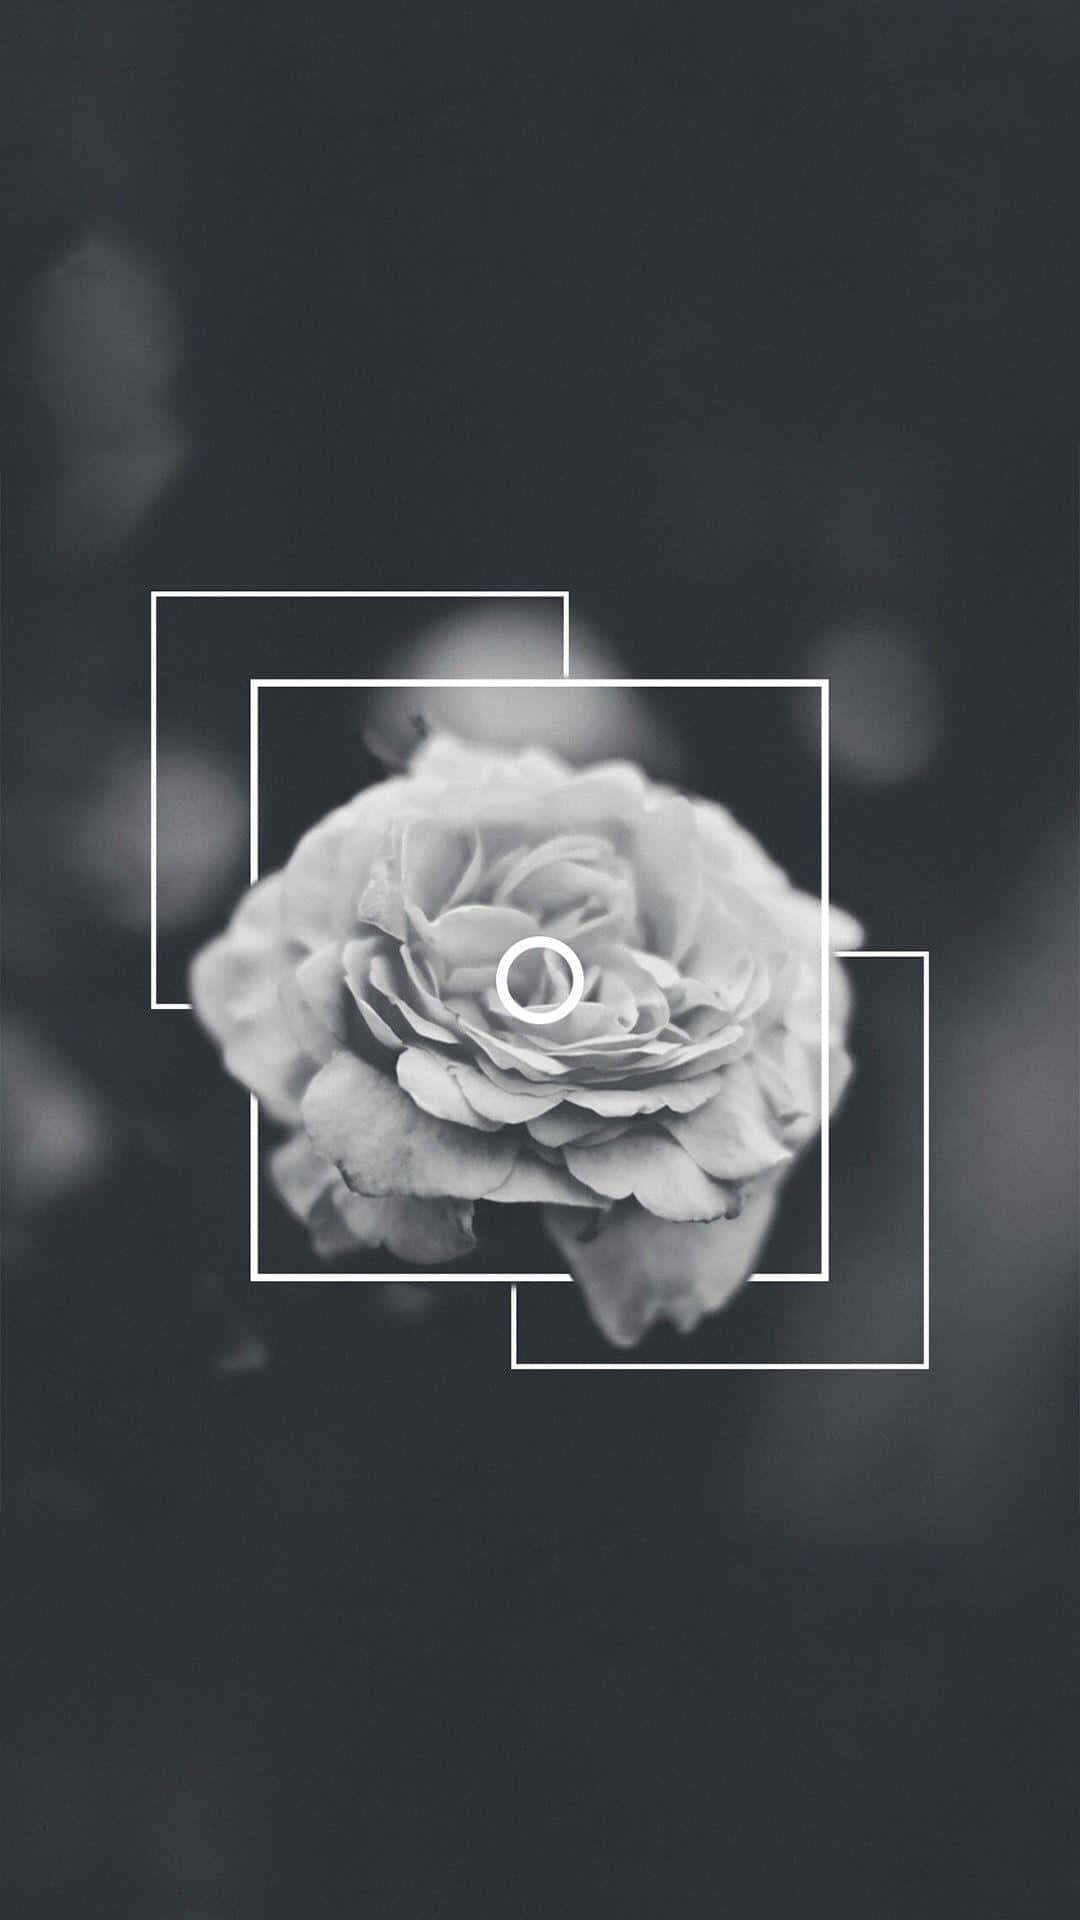 Aesthetic Black And White Rose Flower Iphone Wallpaper